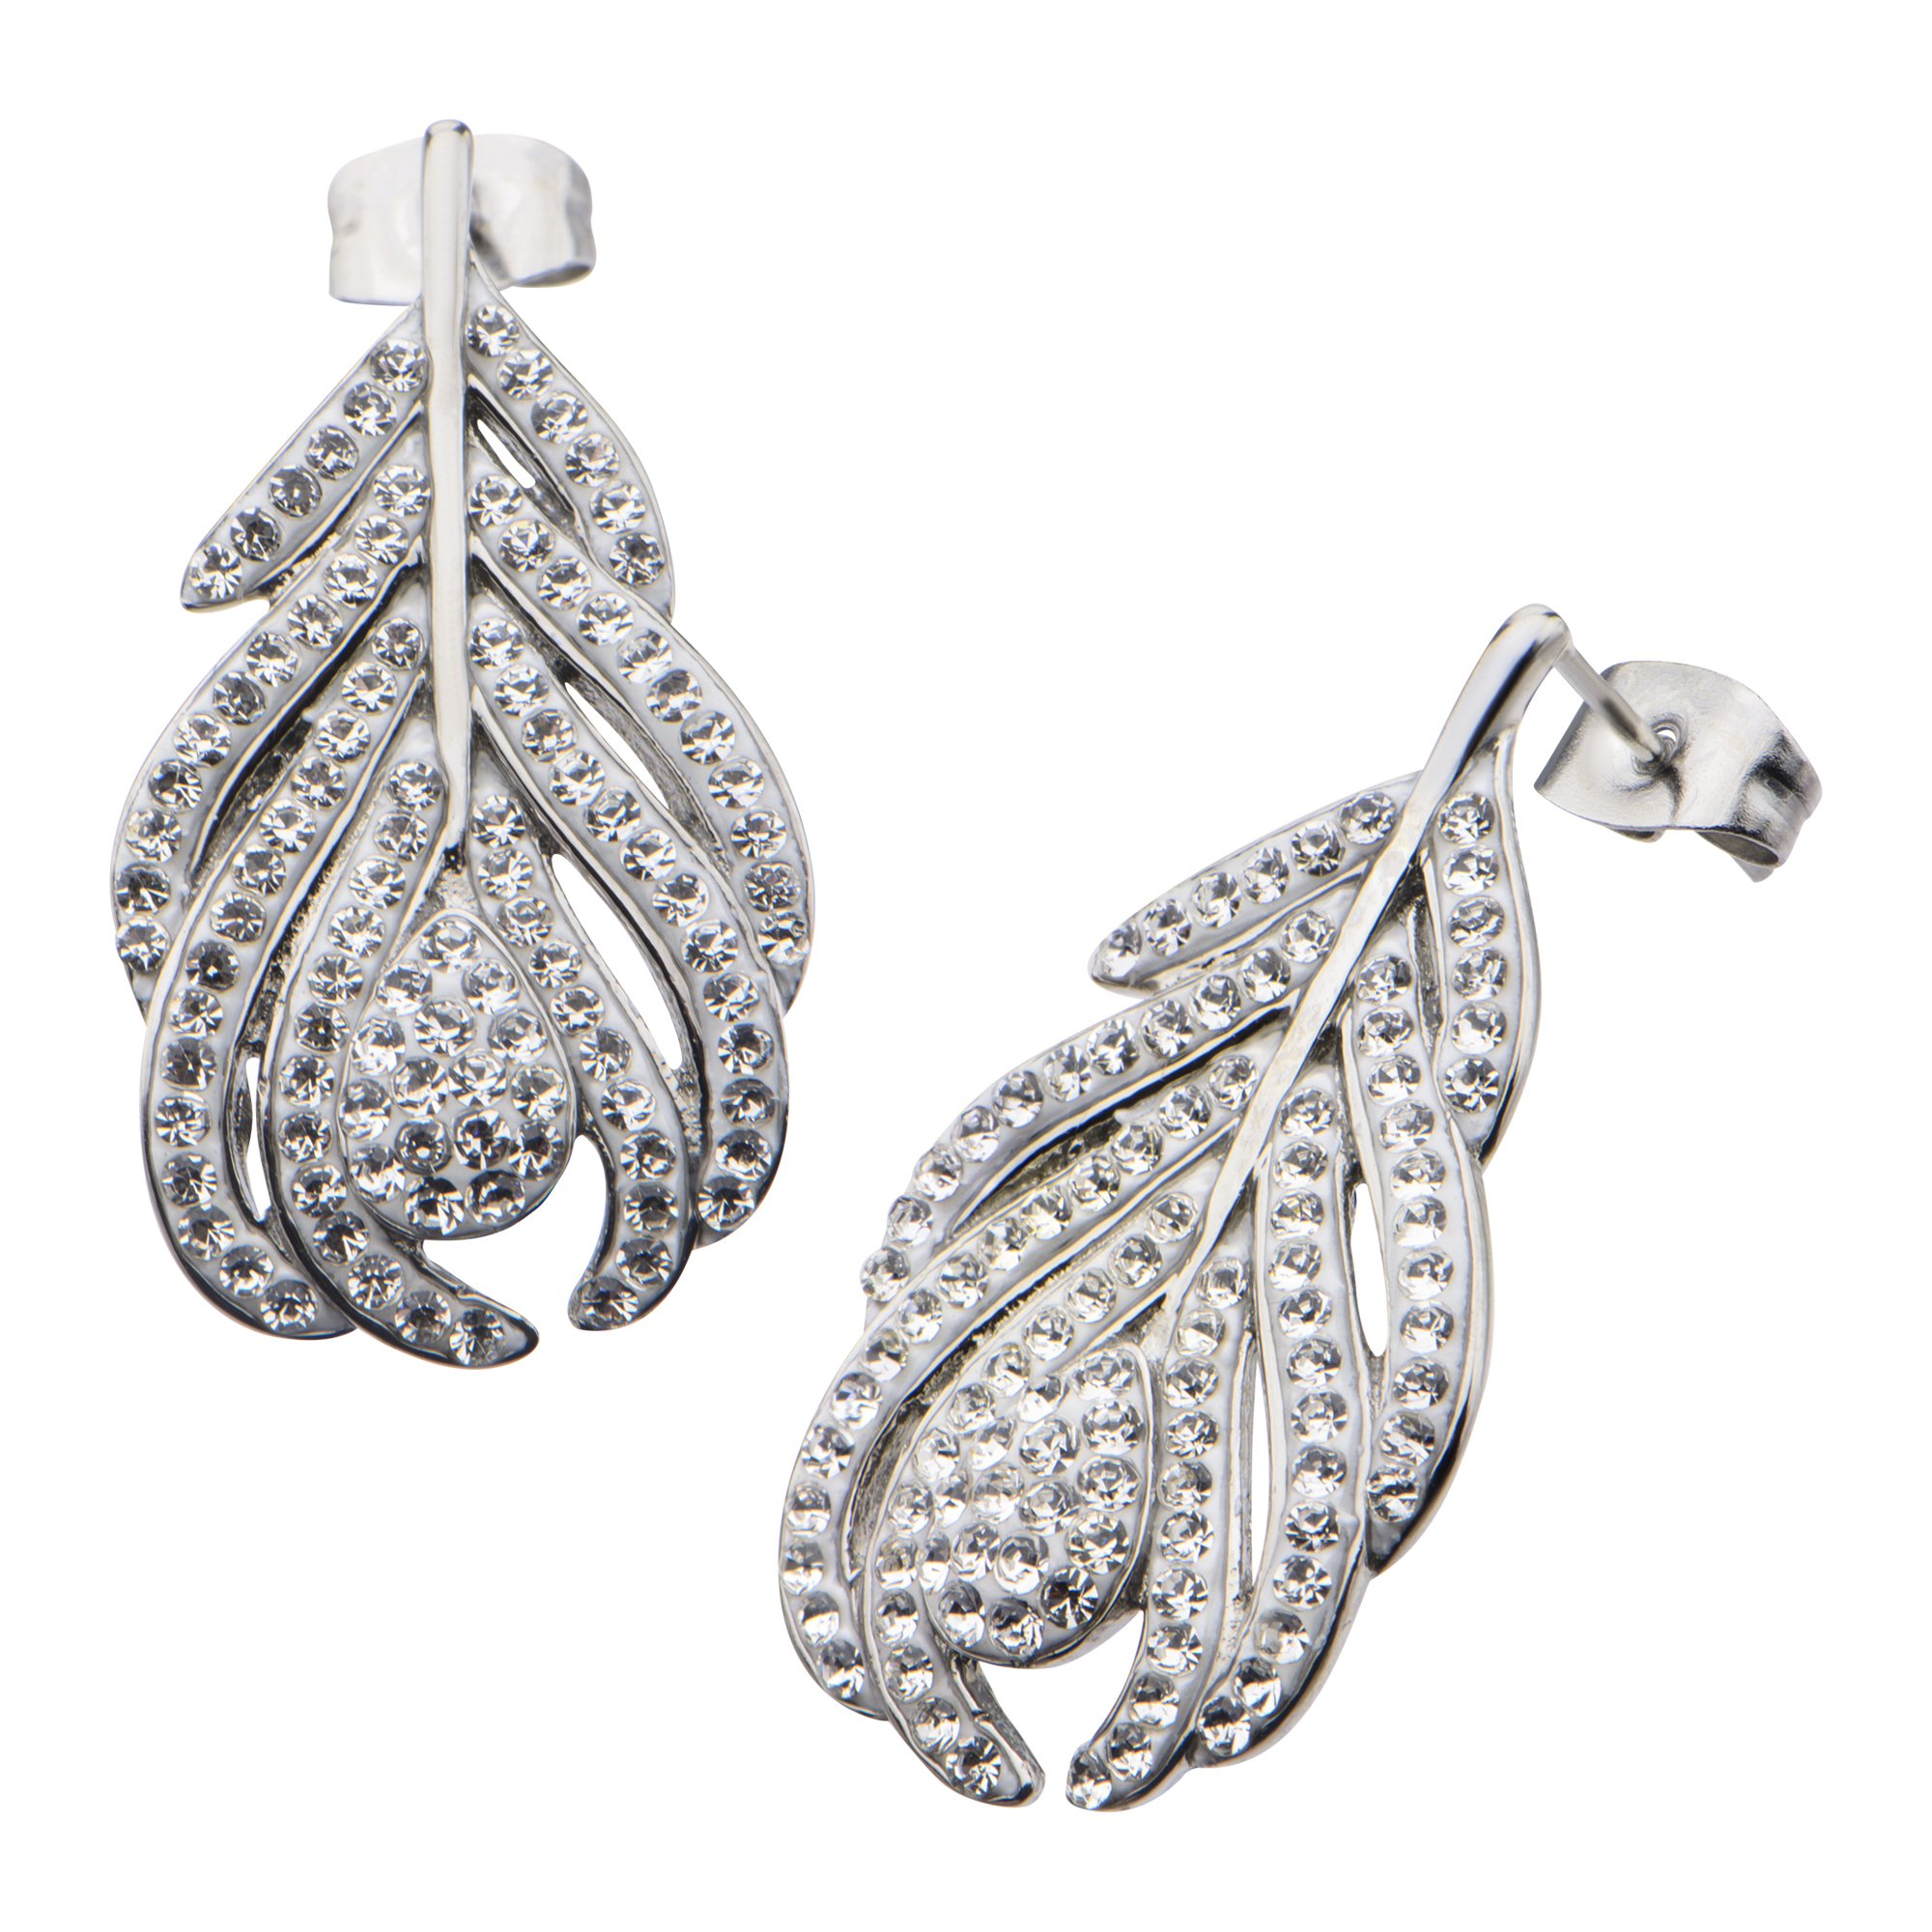 Inox Jewelry Women's Stainless Steel Leaf Crystal Stud Earrings